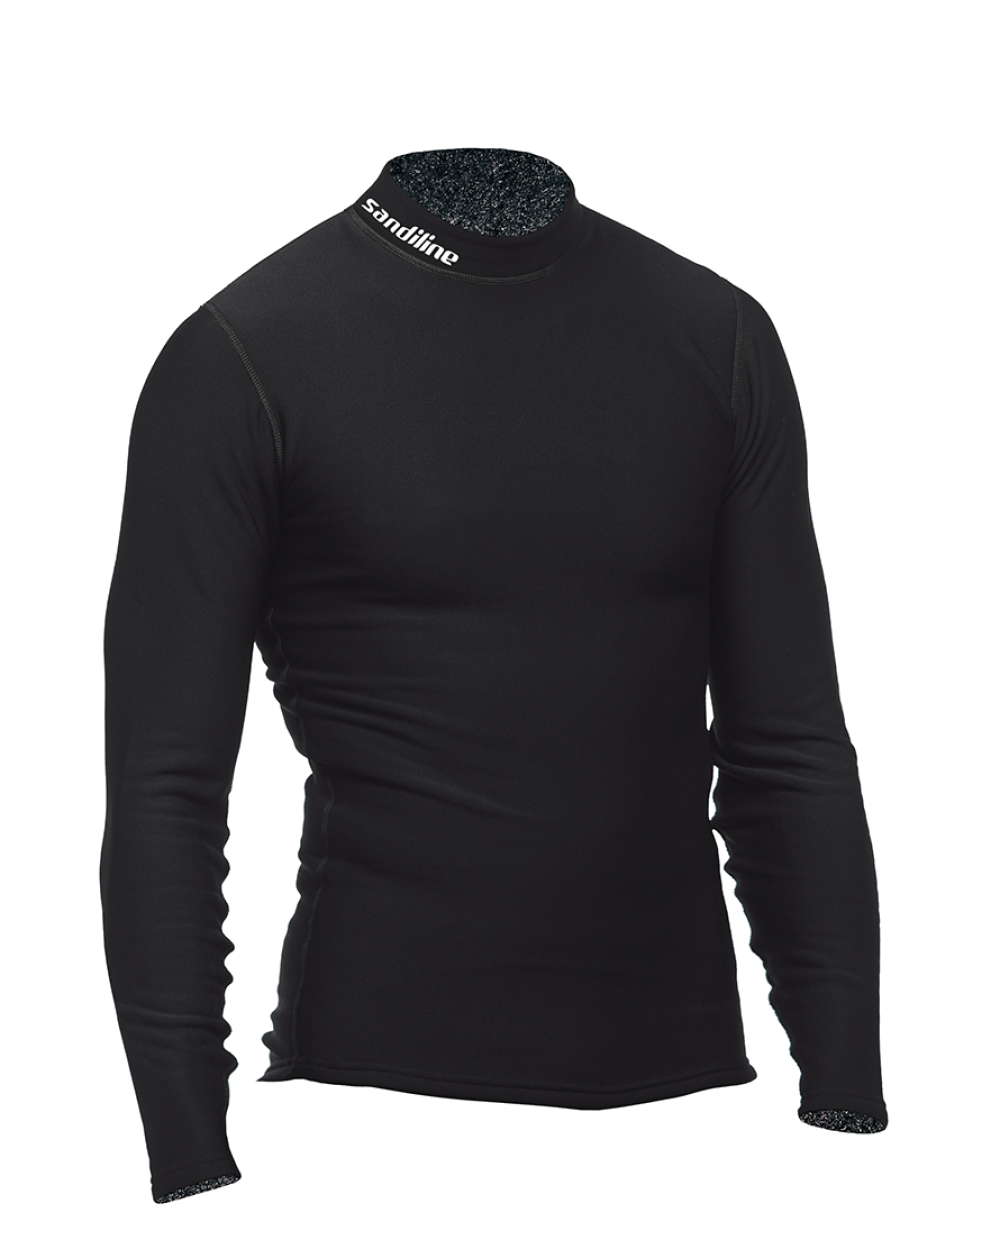 SANDILINE Baselayer Polartec® Powerstretch® Pro Shirt - XL